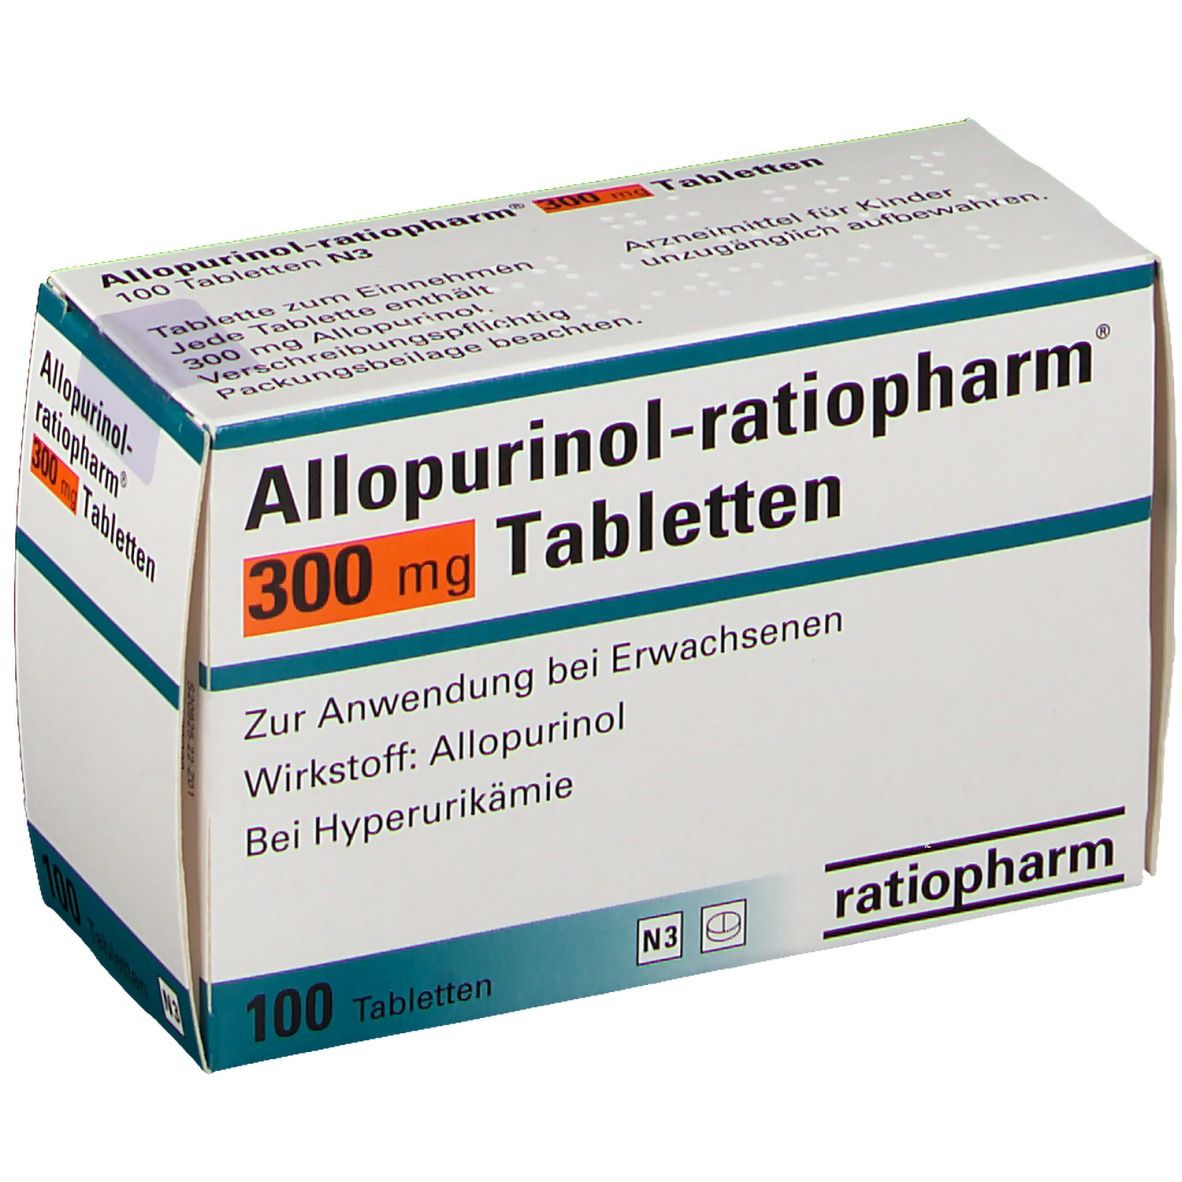 Allopurinol-ratiopharm® 300 mg